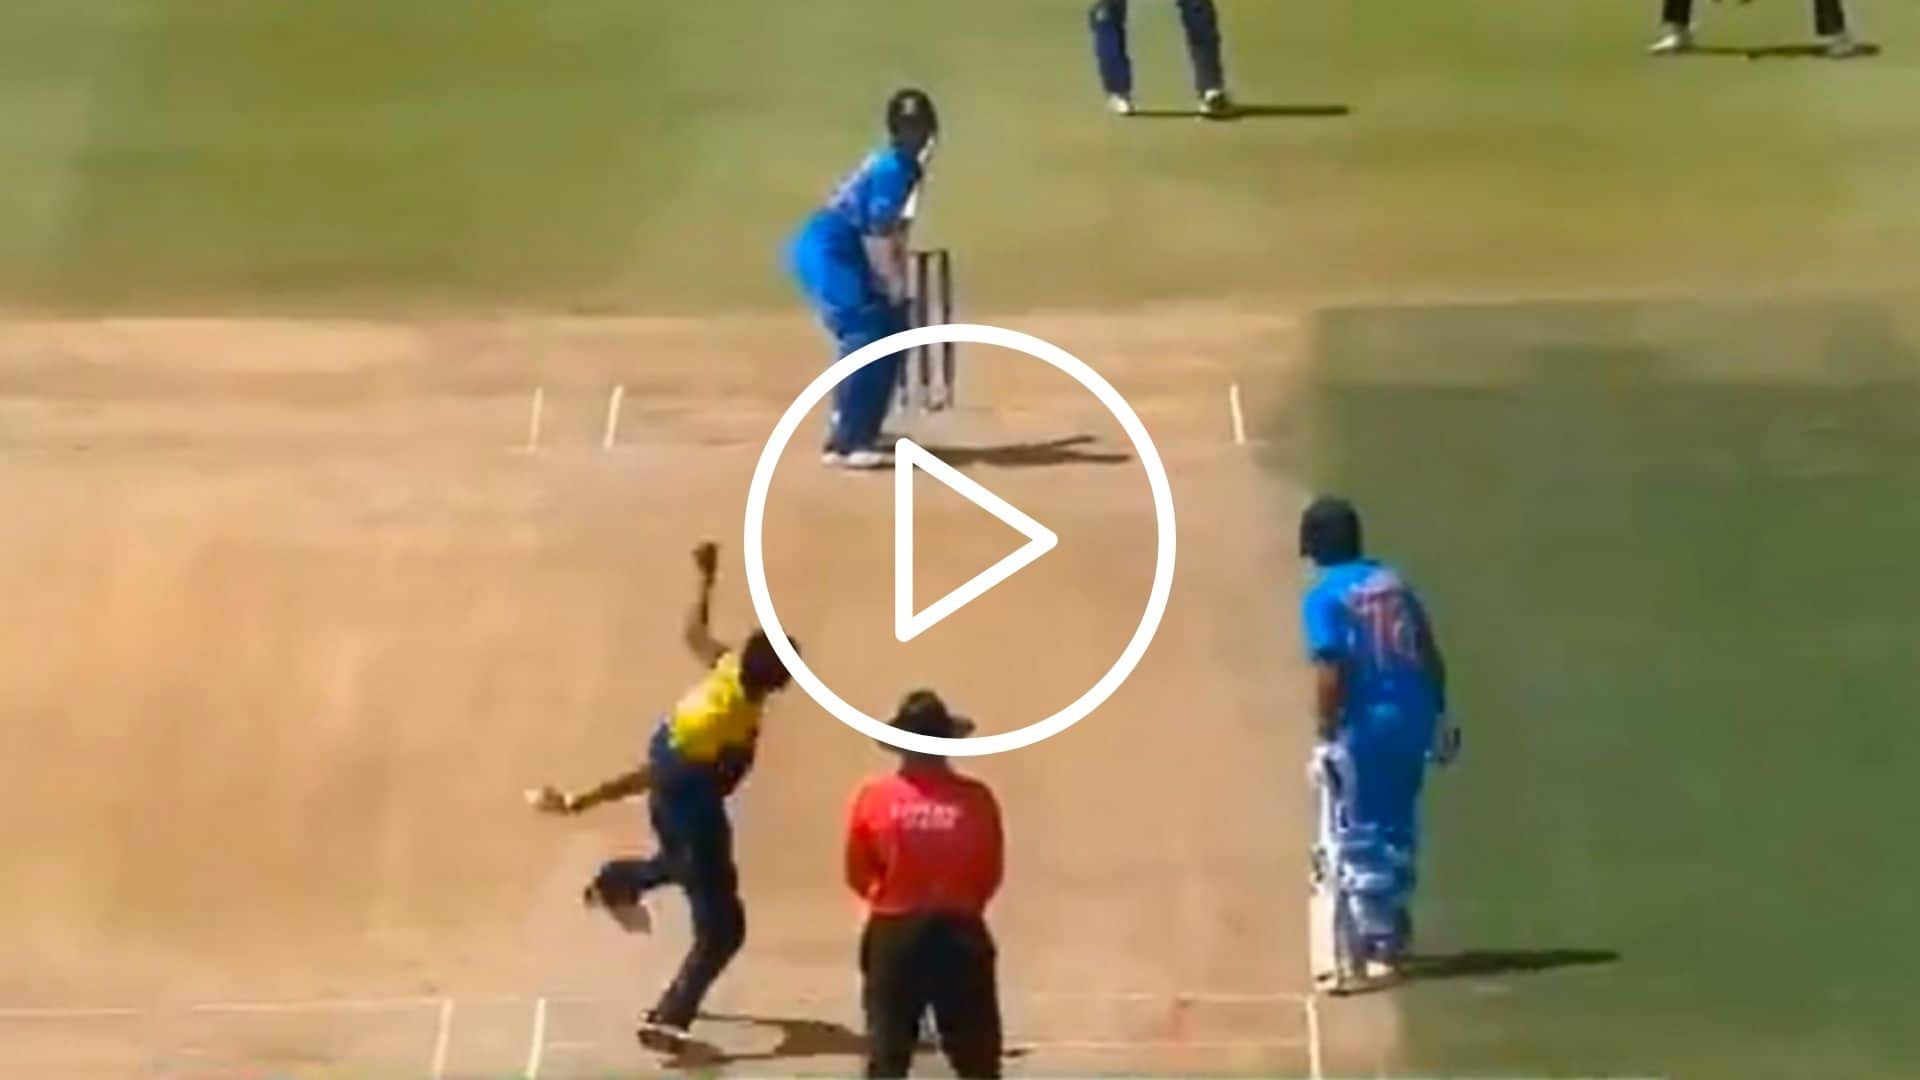 [Watch] When Matheesha Pathirana Bowled A 175 kmph Ball!